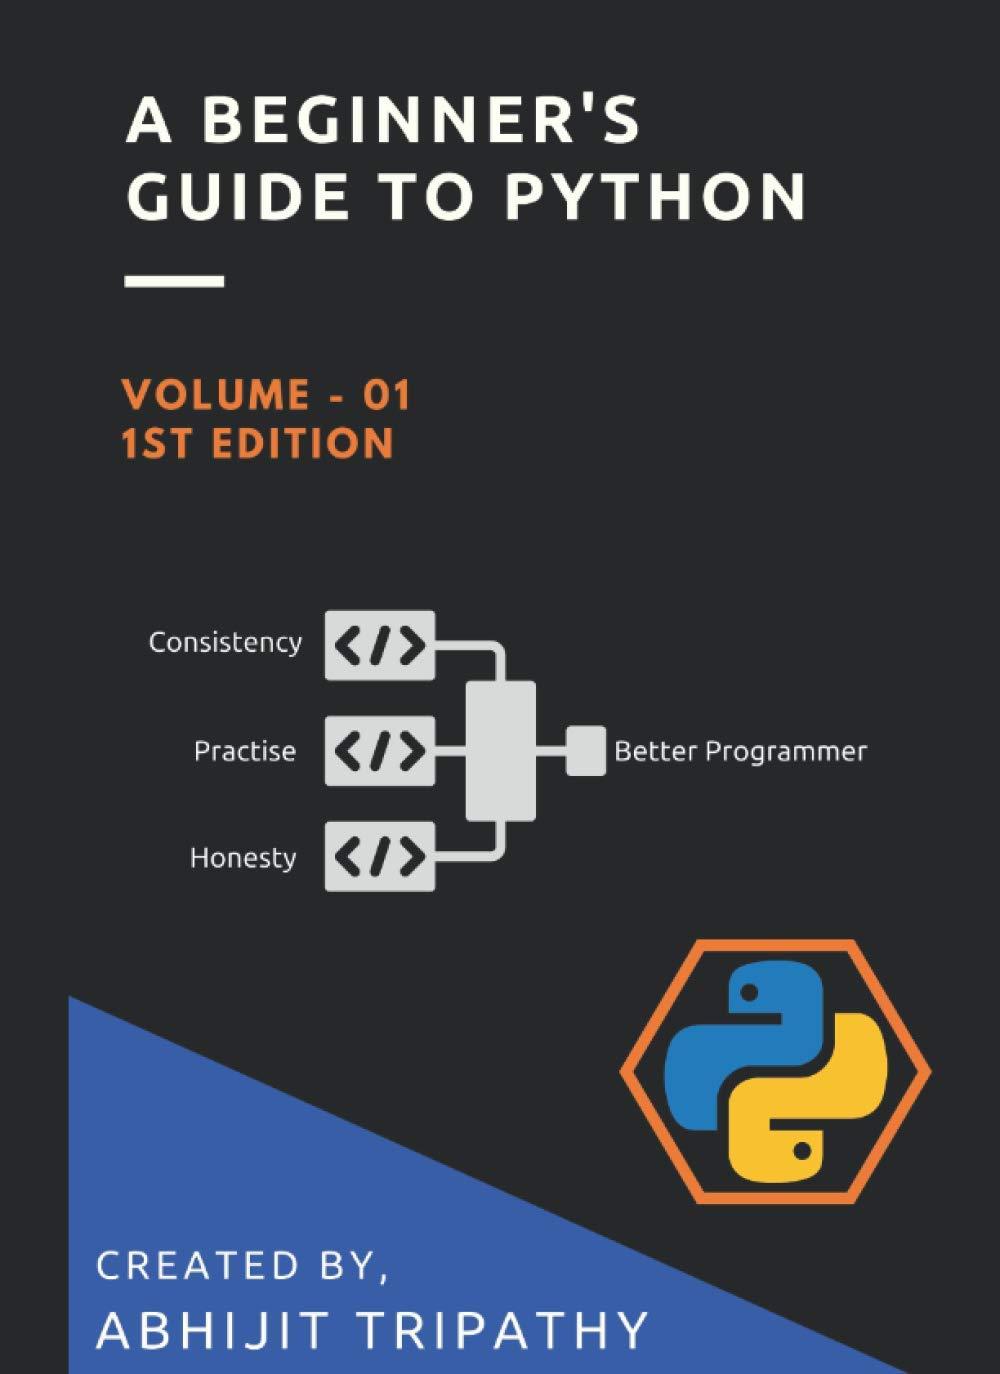 a beginner's guide to python 1st edition mr. abhijit tripathy b08sb5z1gc, 979-8590685851